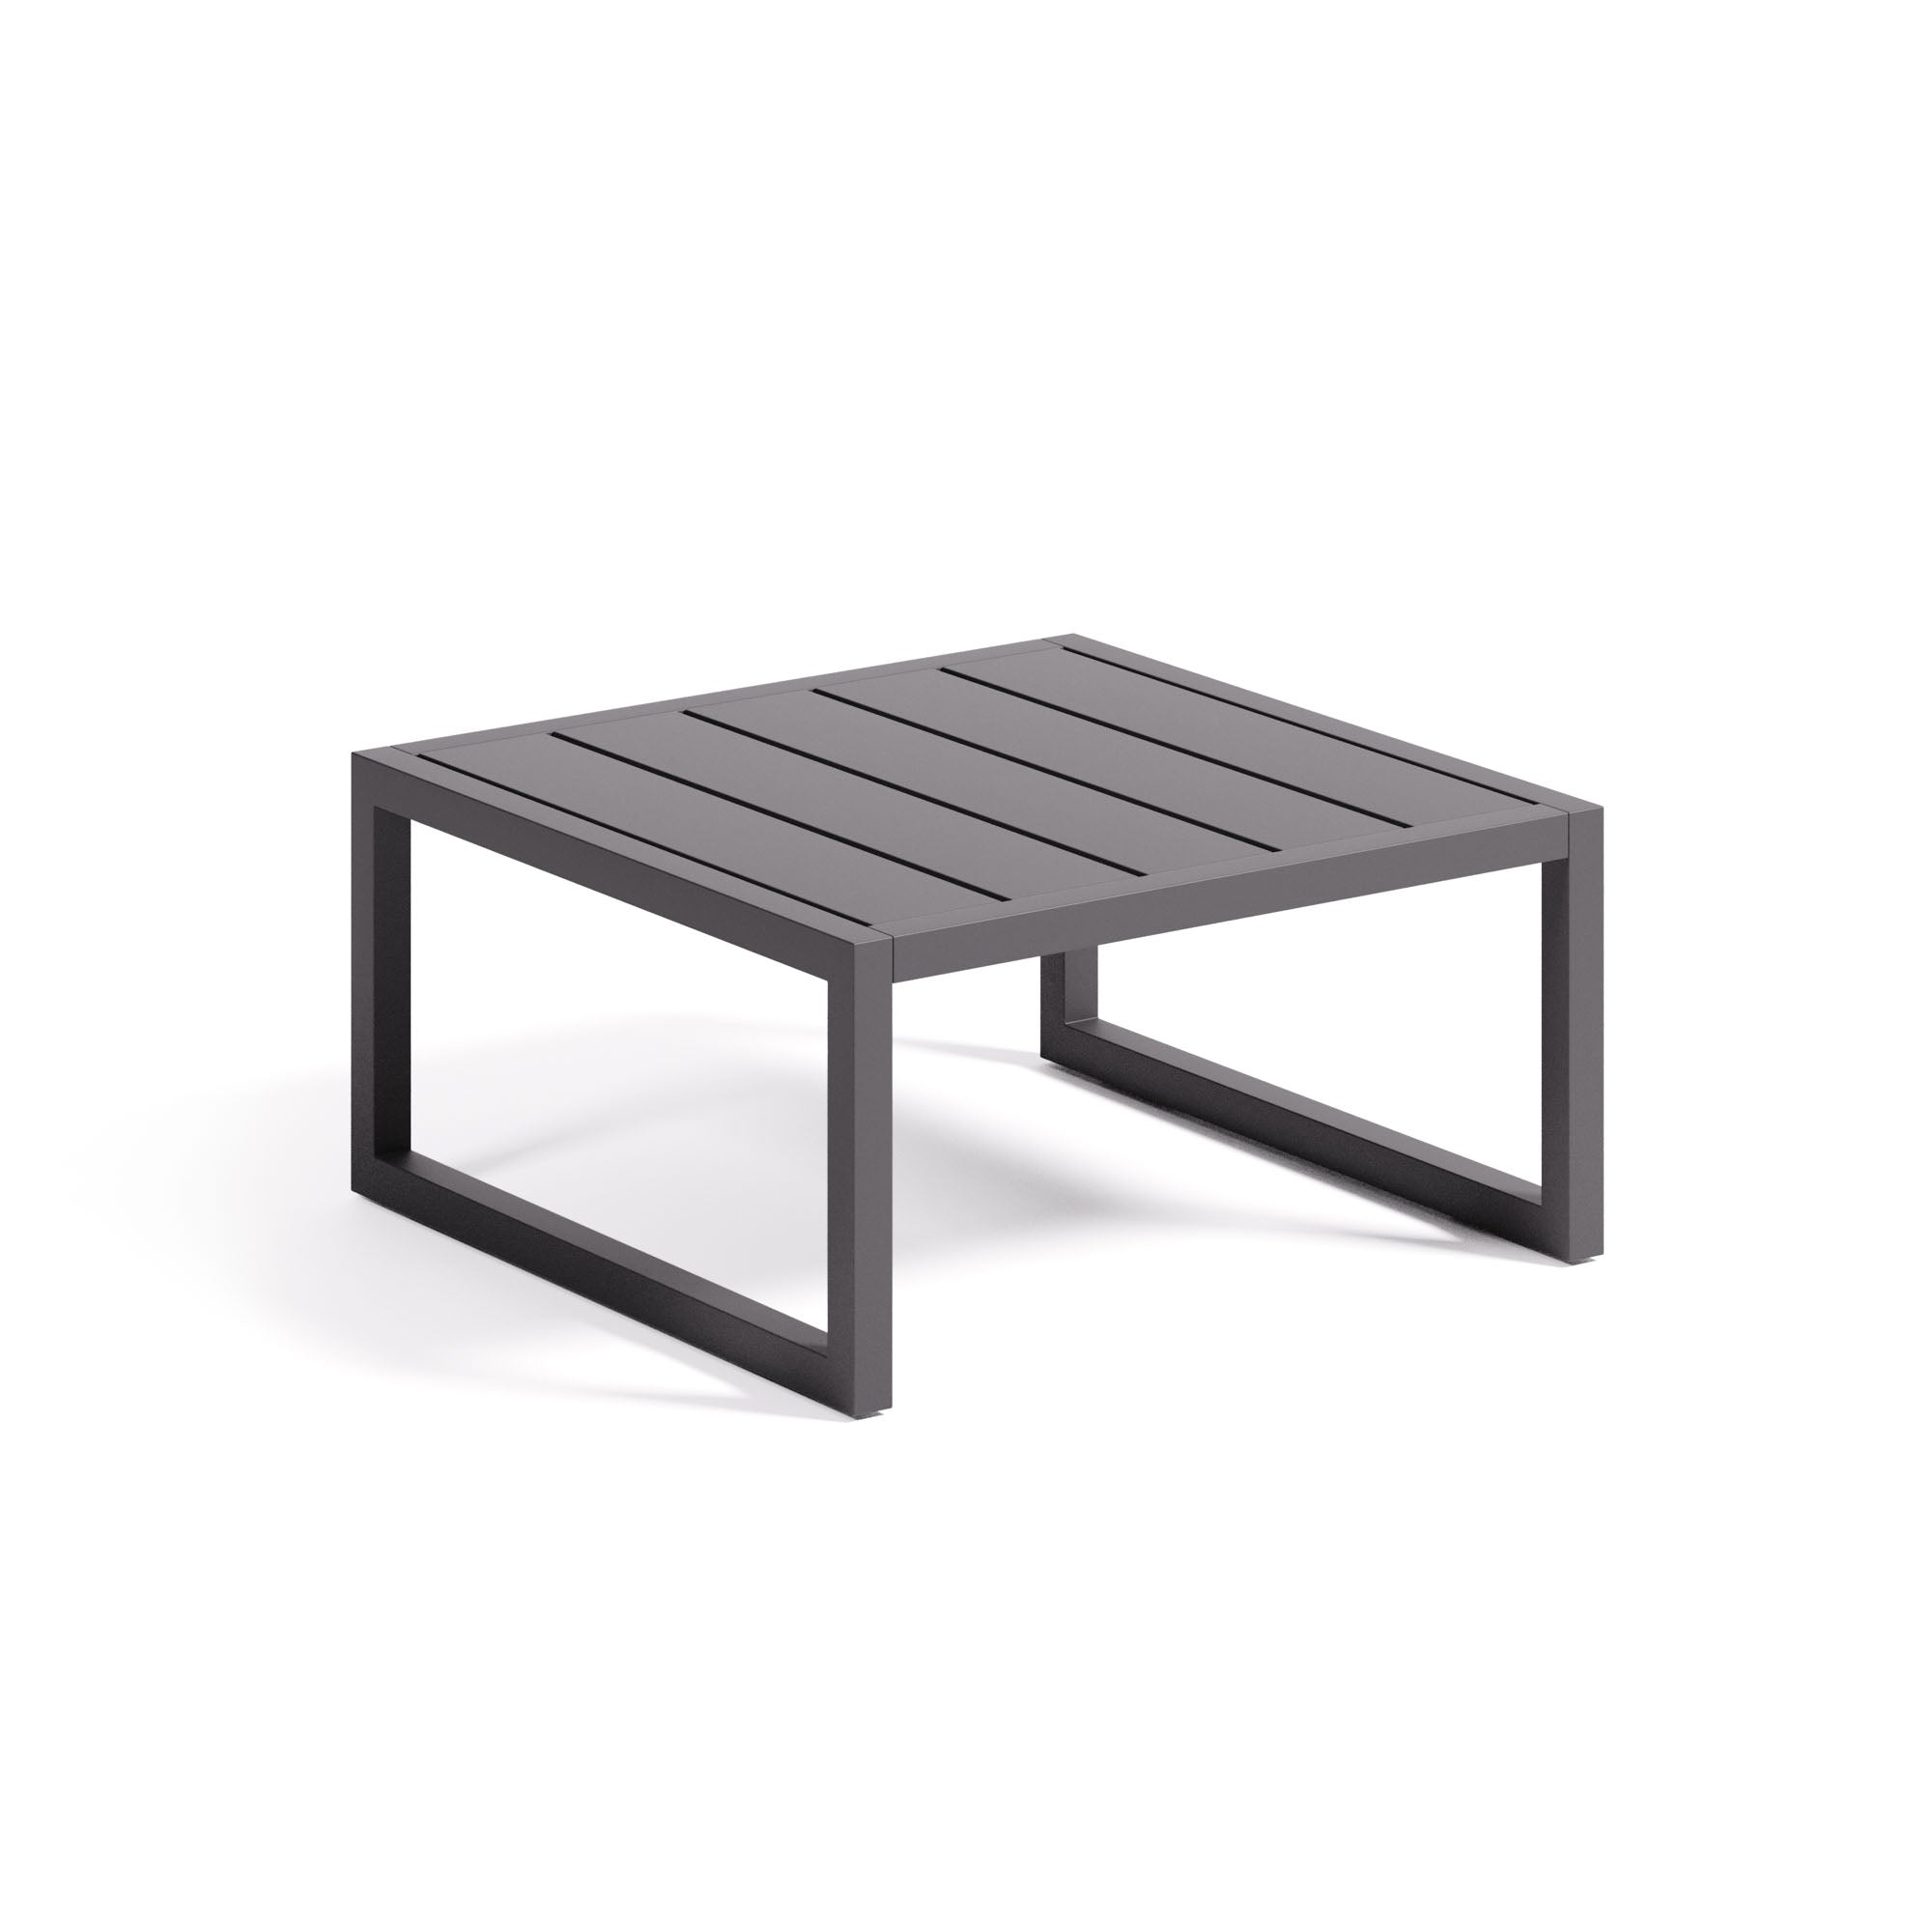 Comova 100% outdoor side table made from black aluminium, 60 x 60 cm